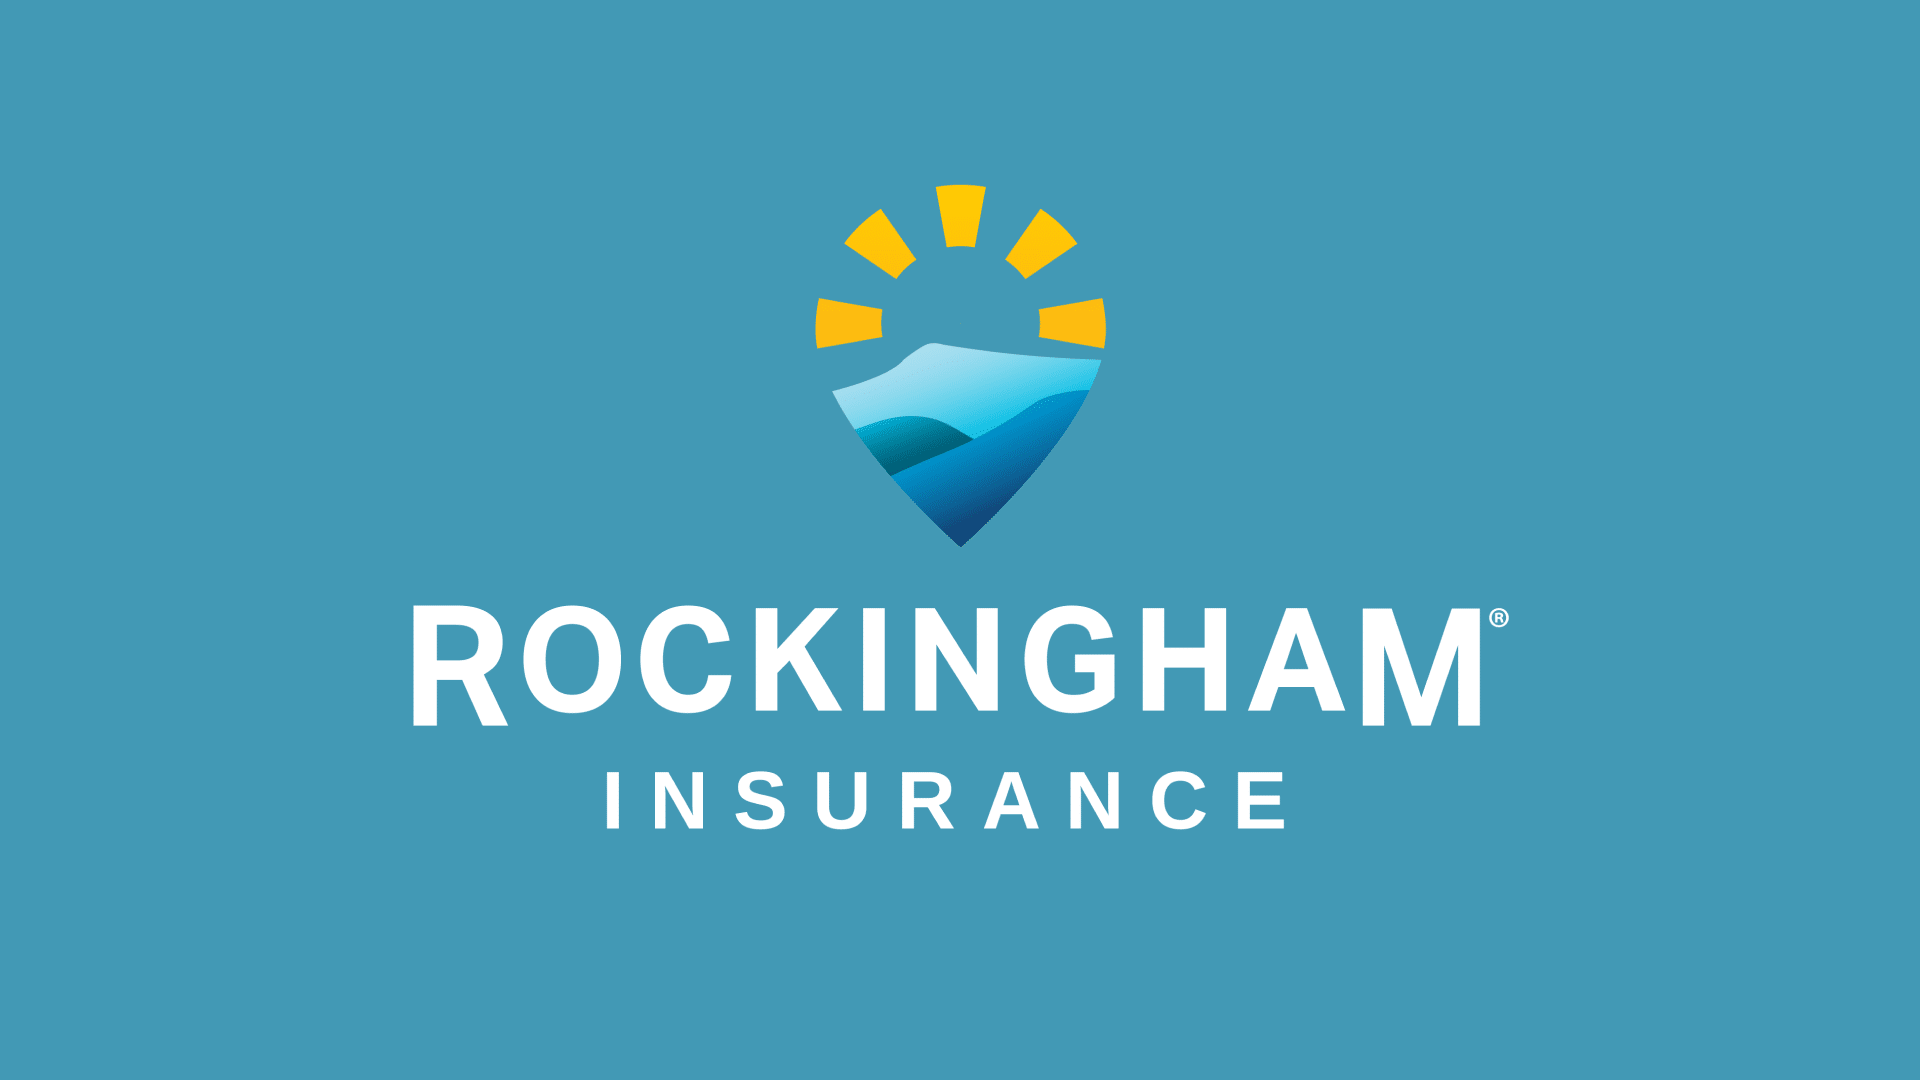 Rockingham Insurance - Home & Auto Insurance, VA & PA